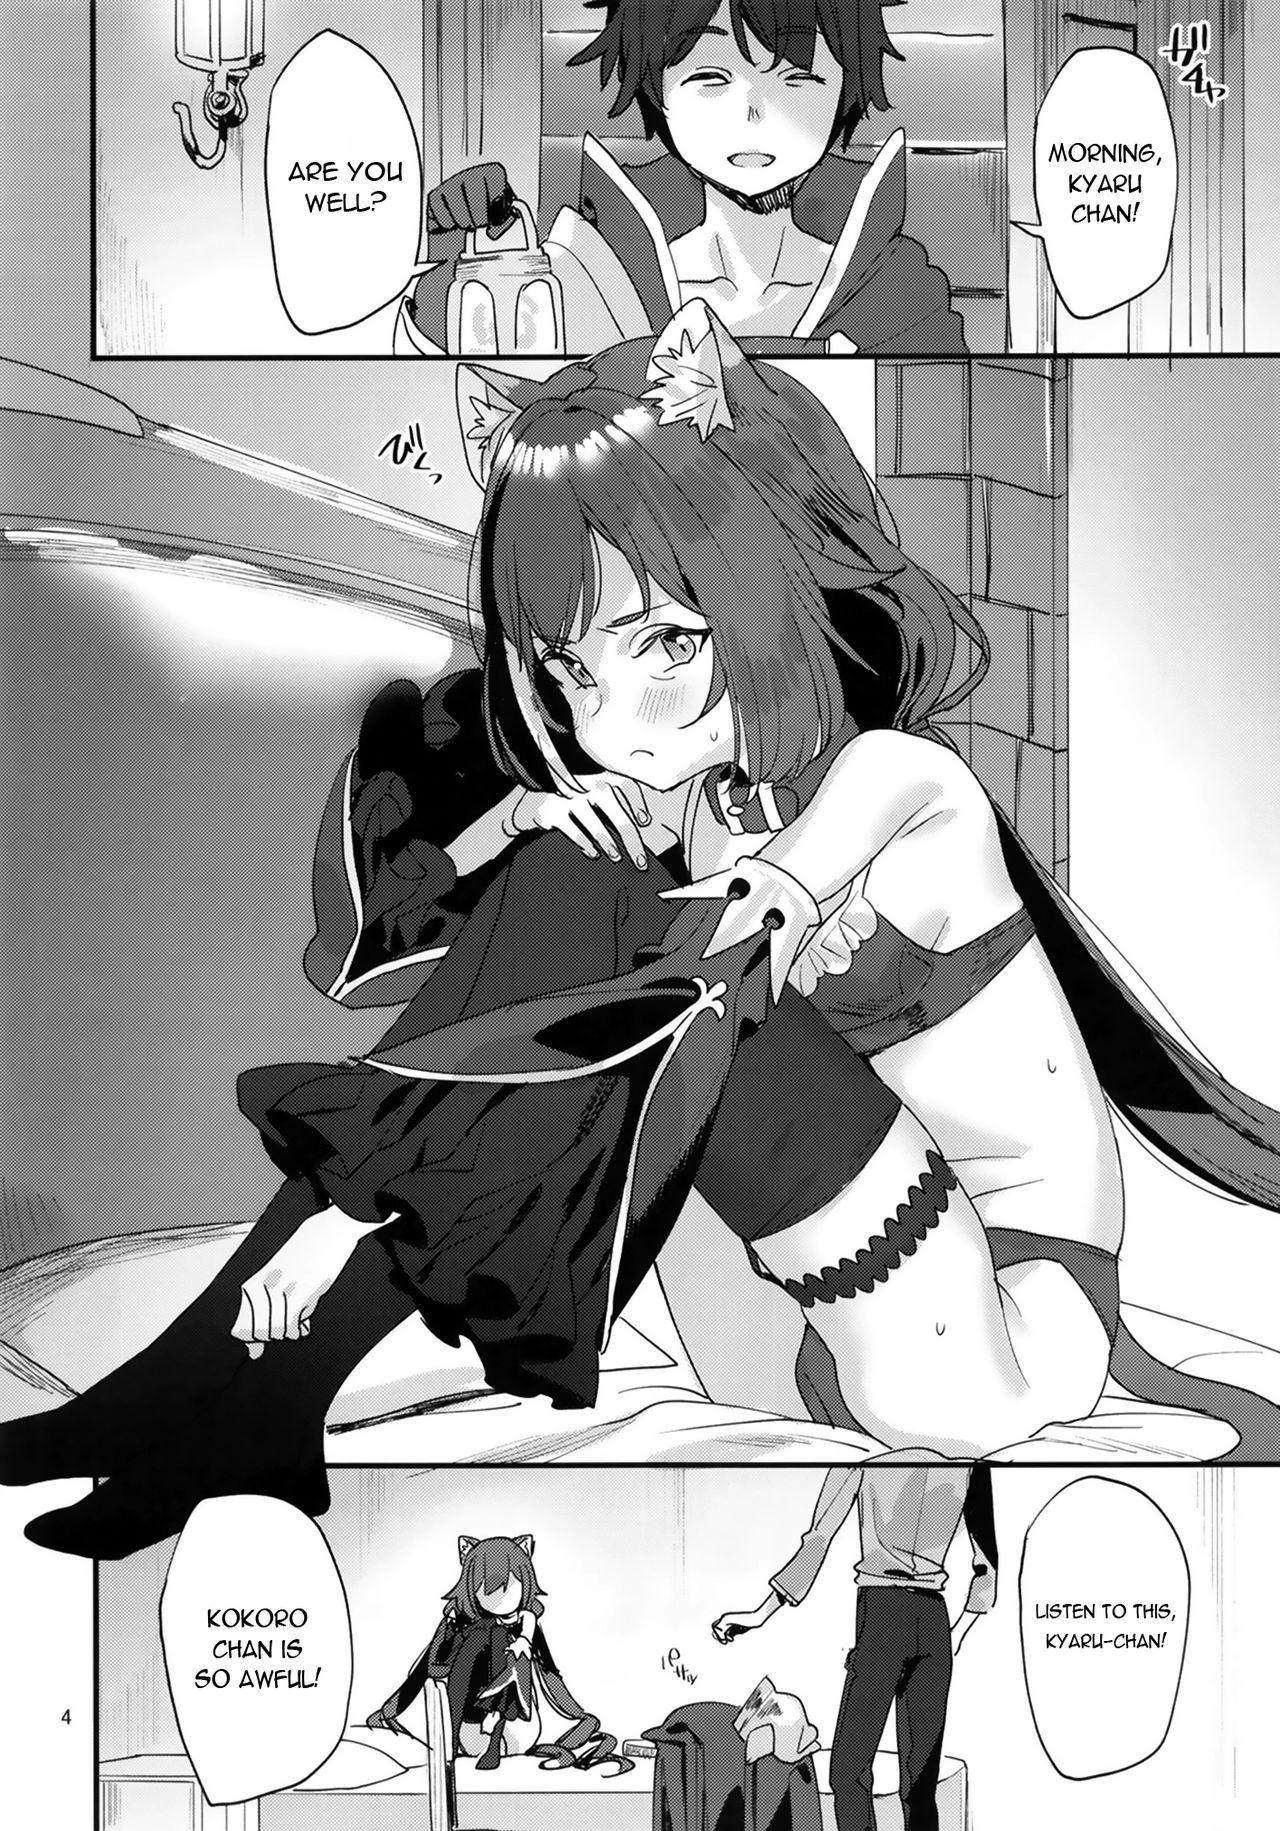 Masturbandose Ohayou, Kyaru-chan - Princess connect Cavalgando - Page 4